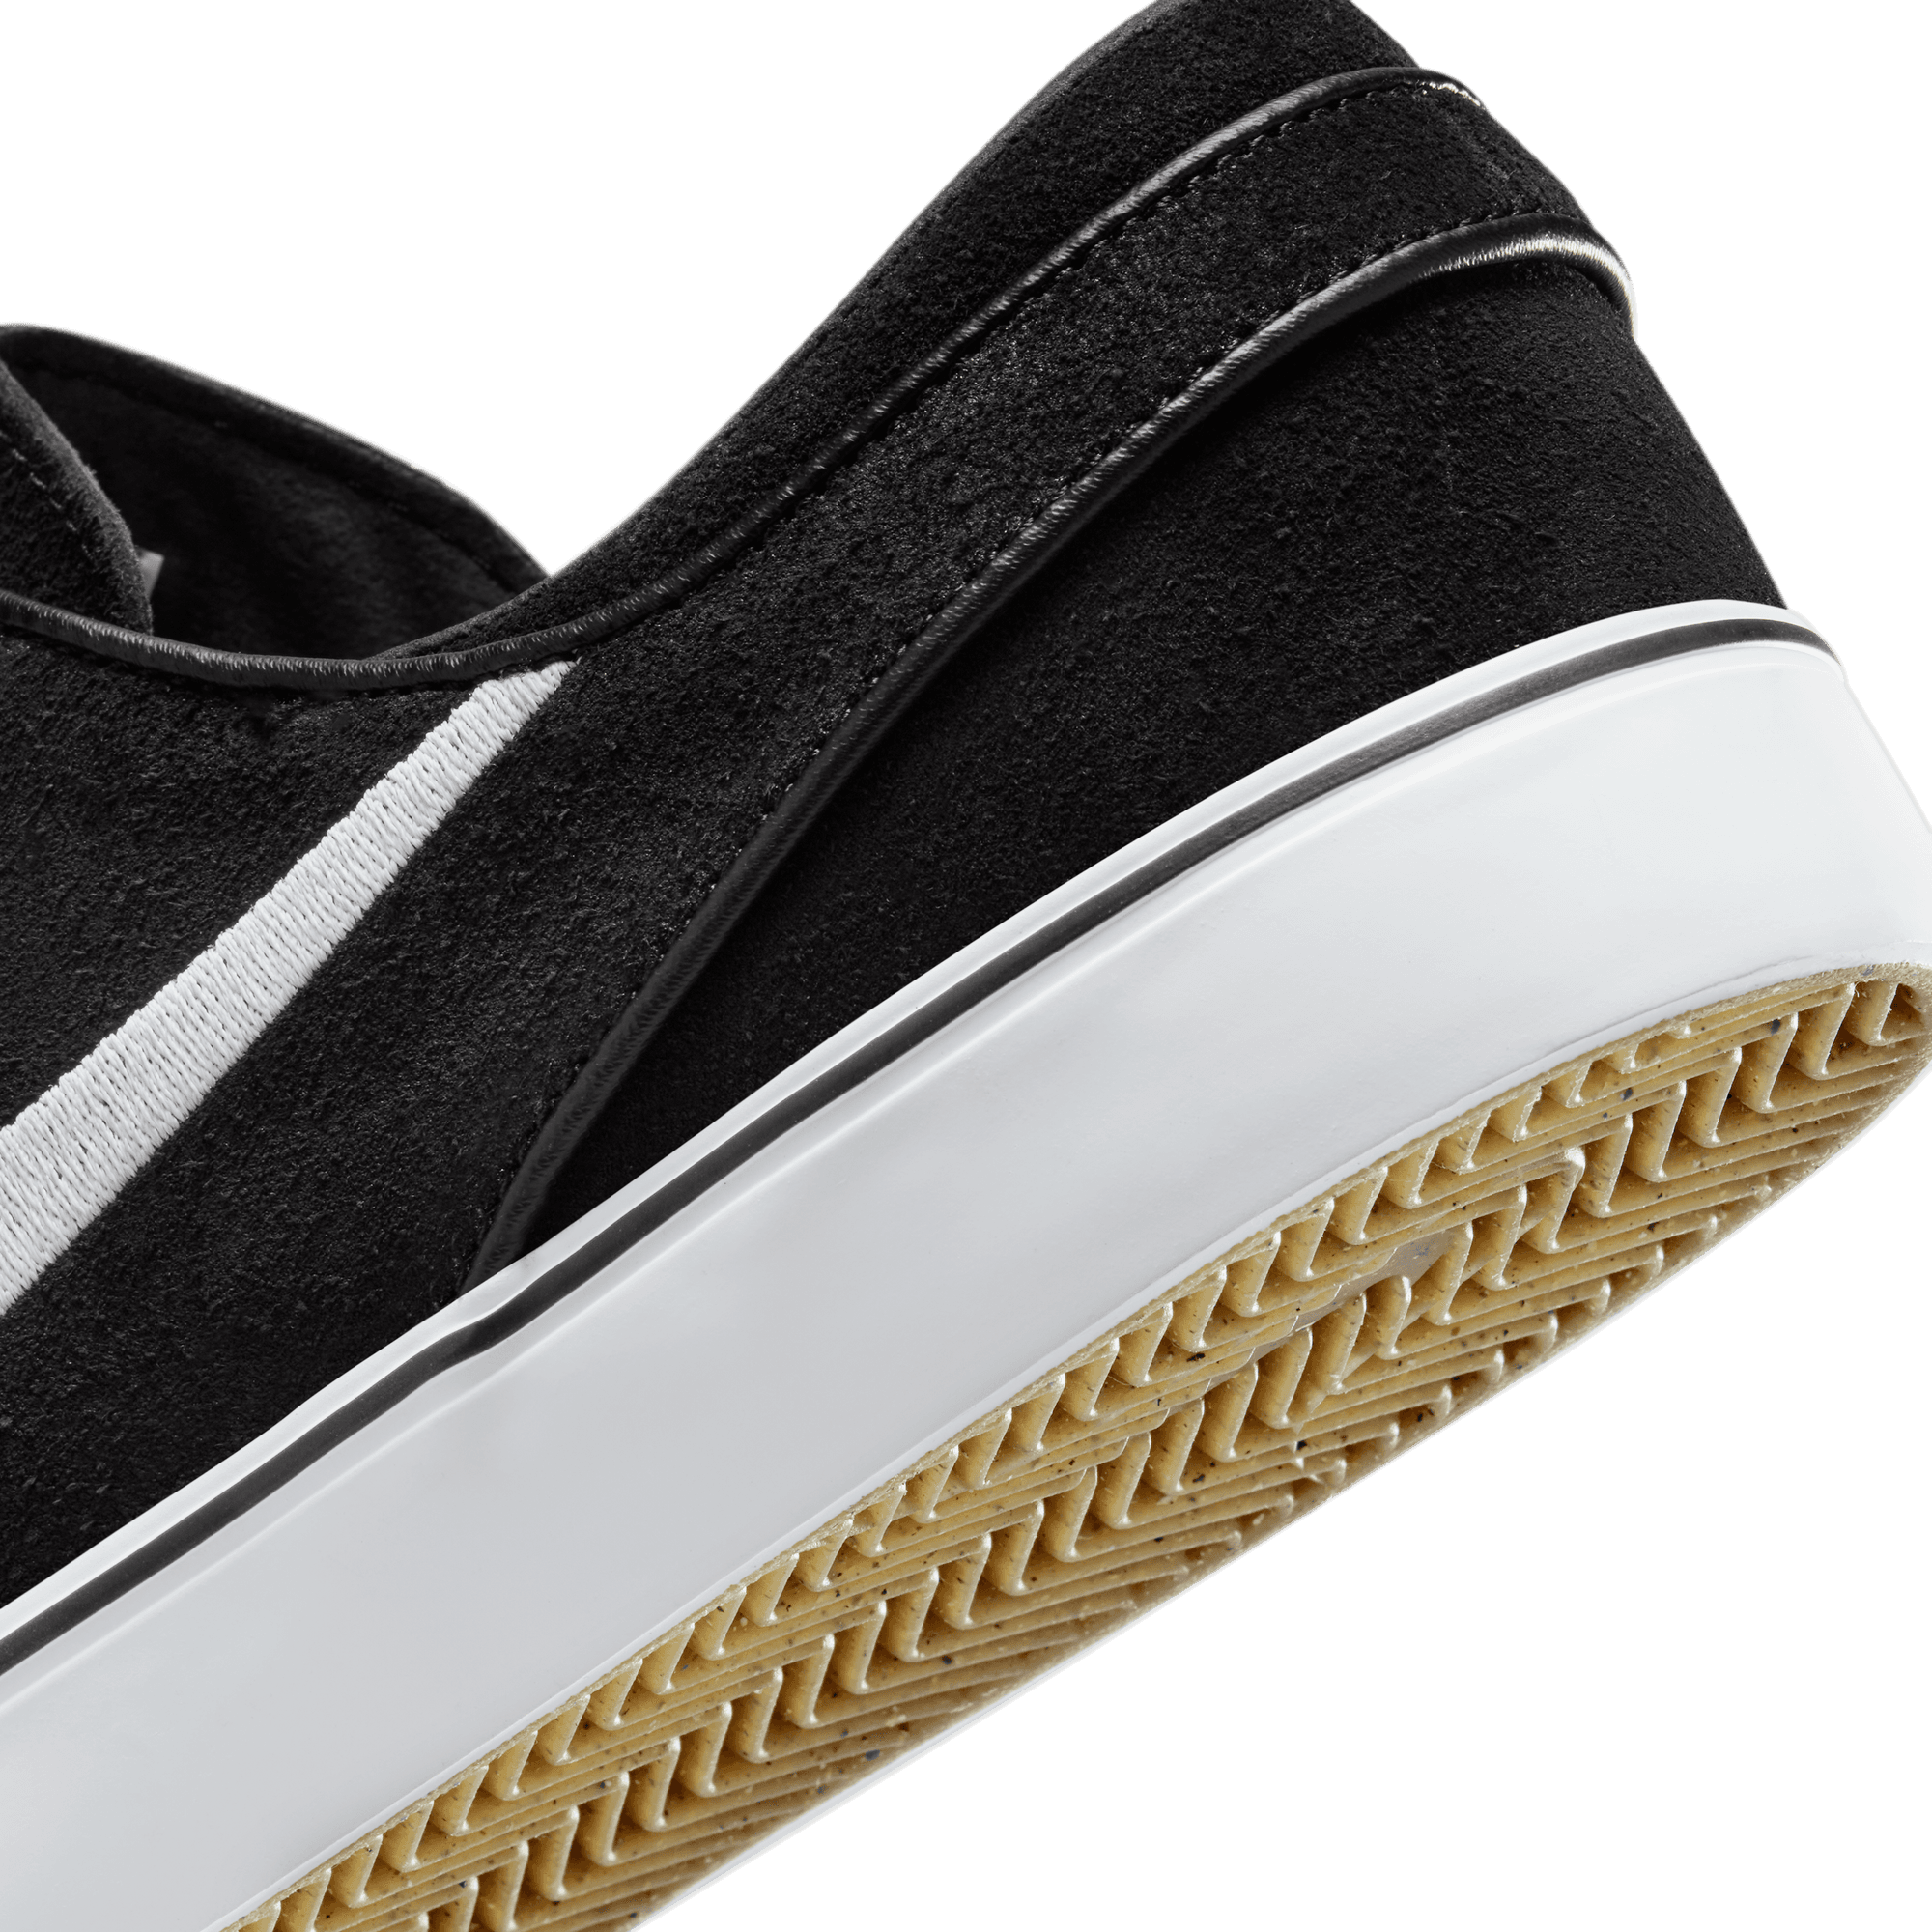 Black/White Janoski OG+ Nike SB Skate Shoe Detail